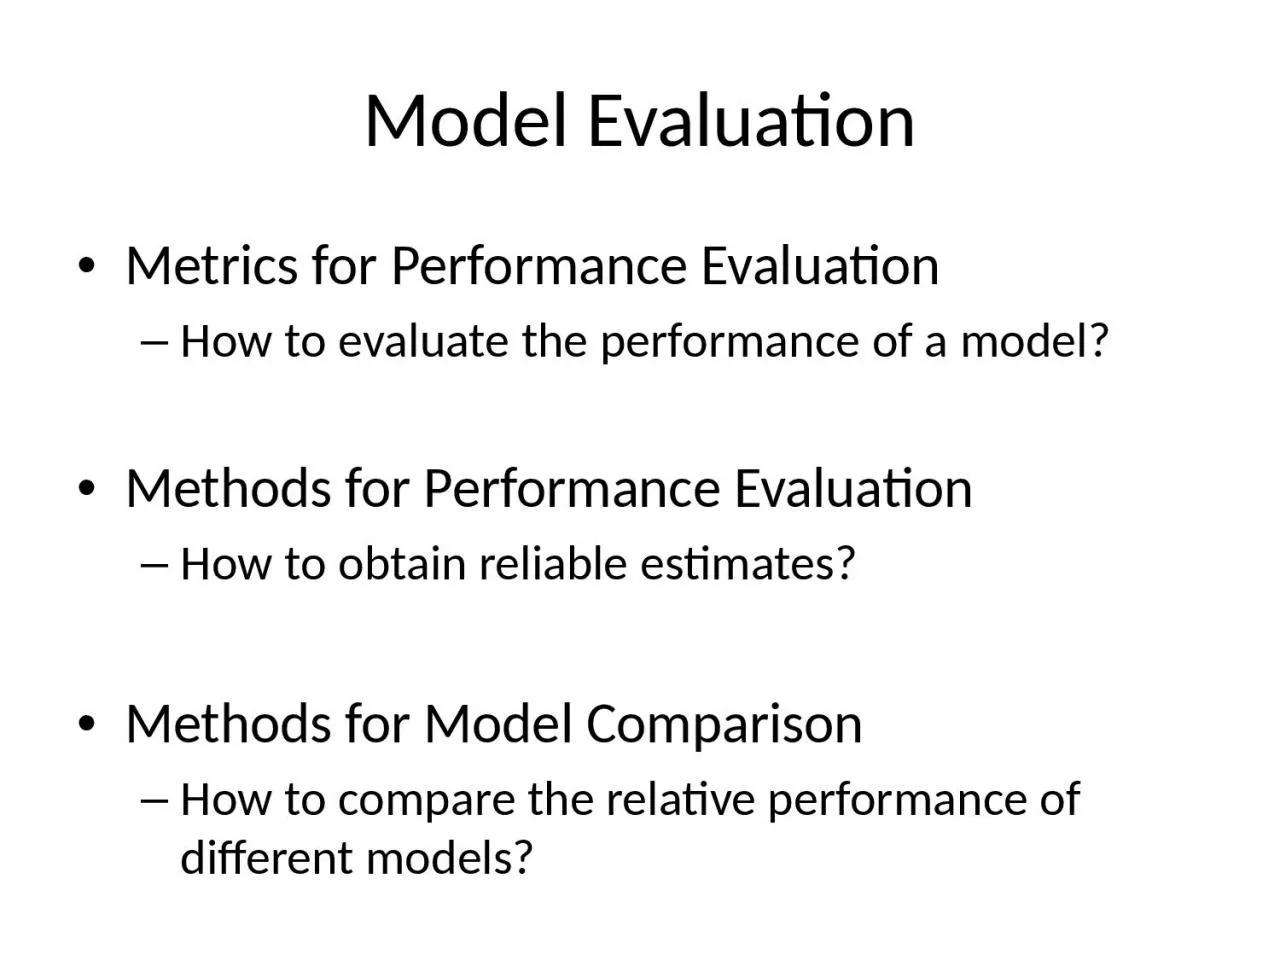 Model Evaluation Metrics for Performance Evaluation